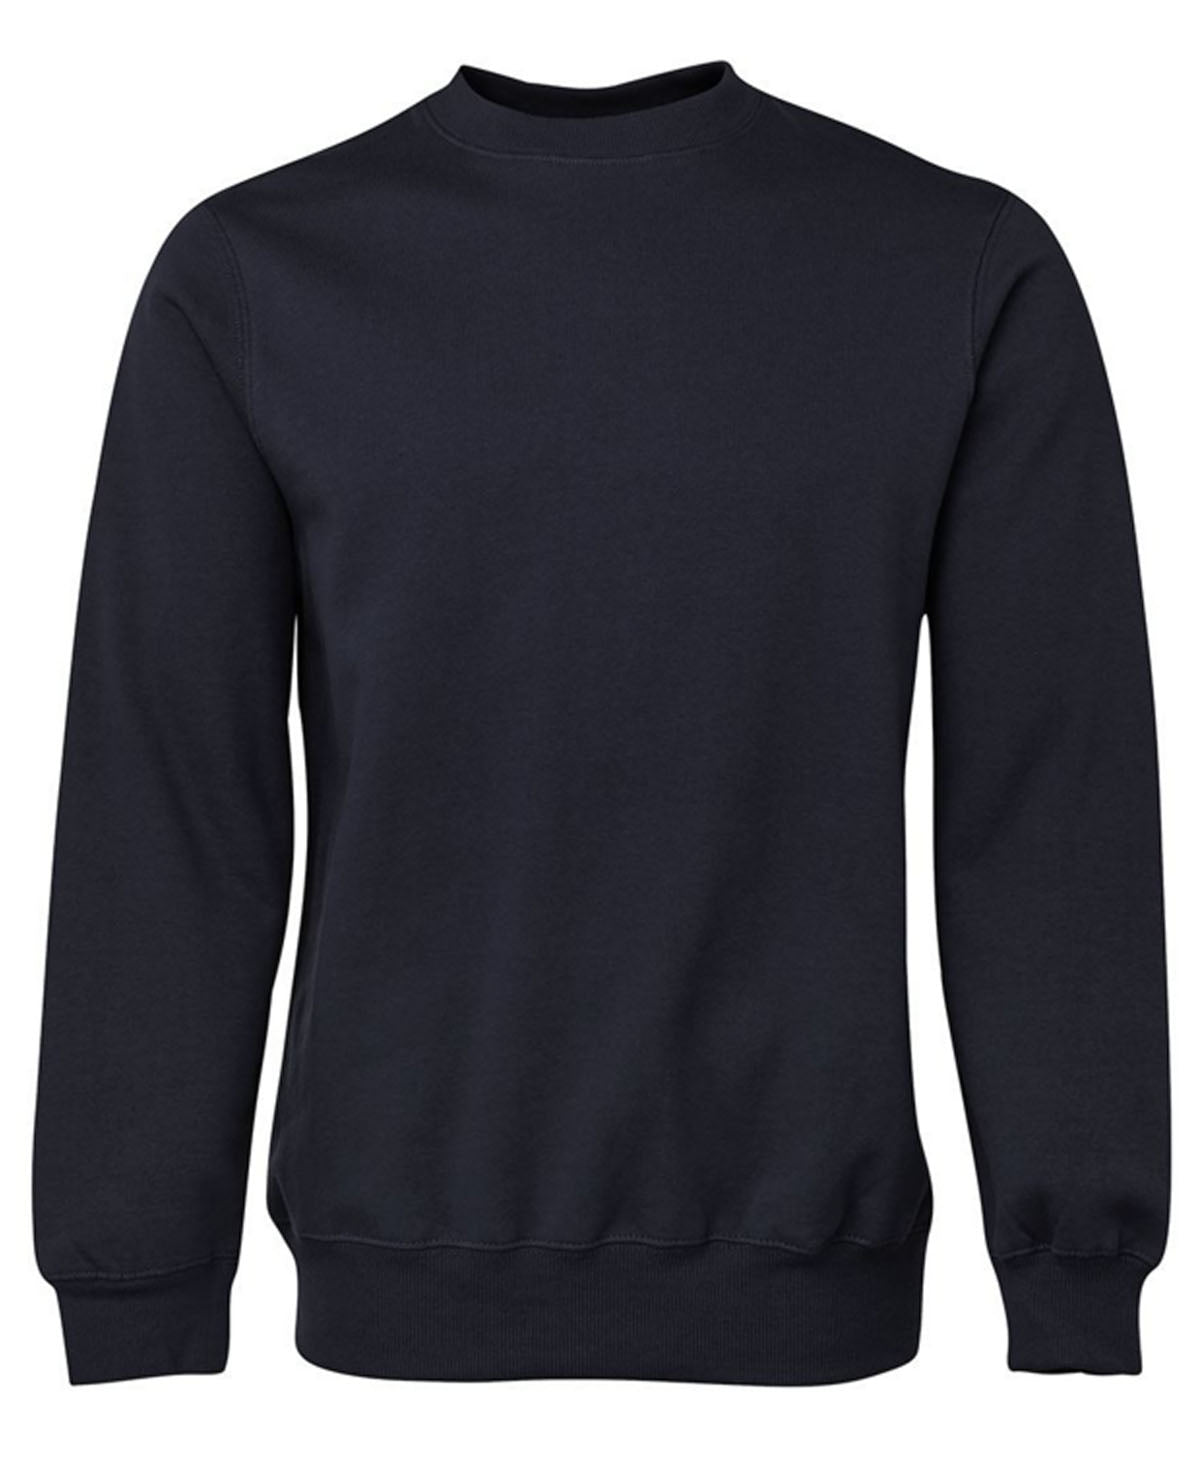 JBs Fleecy Sweater Crew Neck- BLACK NAVY GREY S Navy Mens Winter Top by JBs Wear | The Bloke Shop